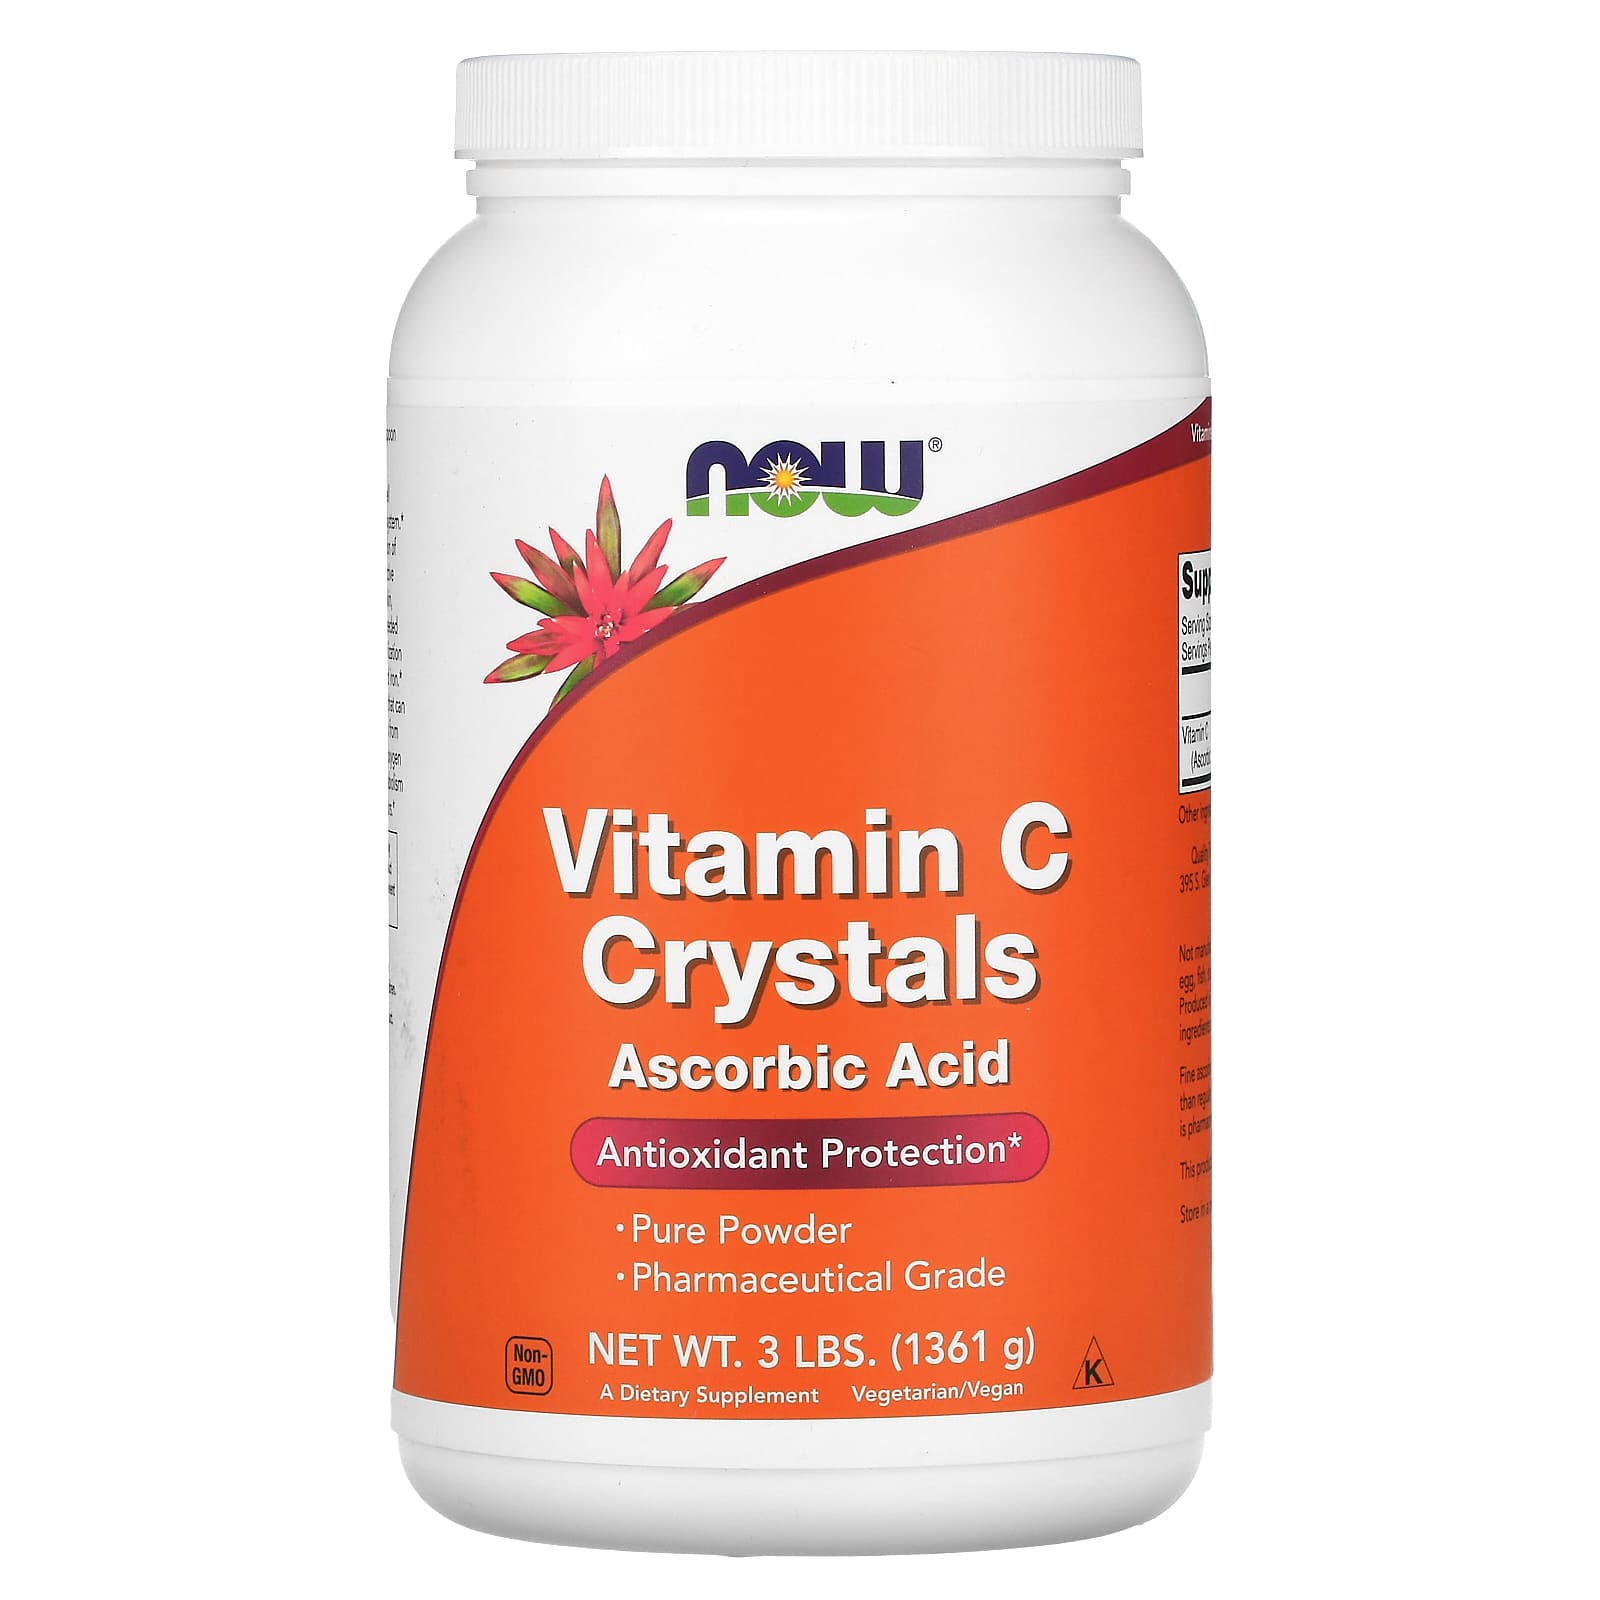 NOW Foods Vitamin C Crystals